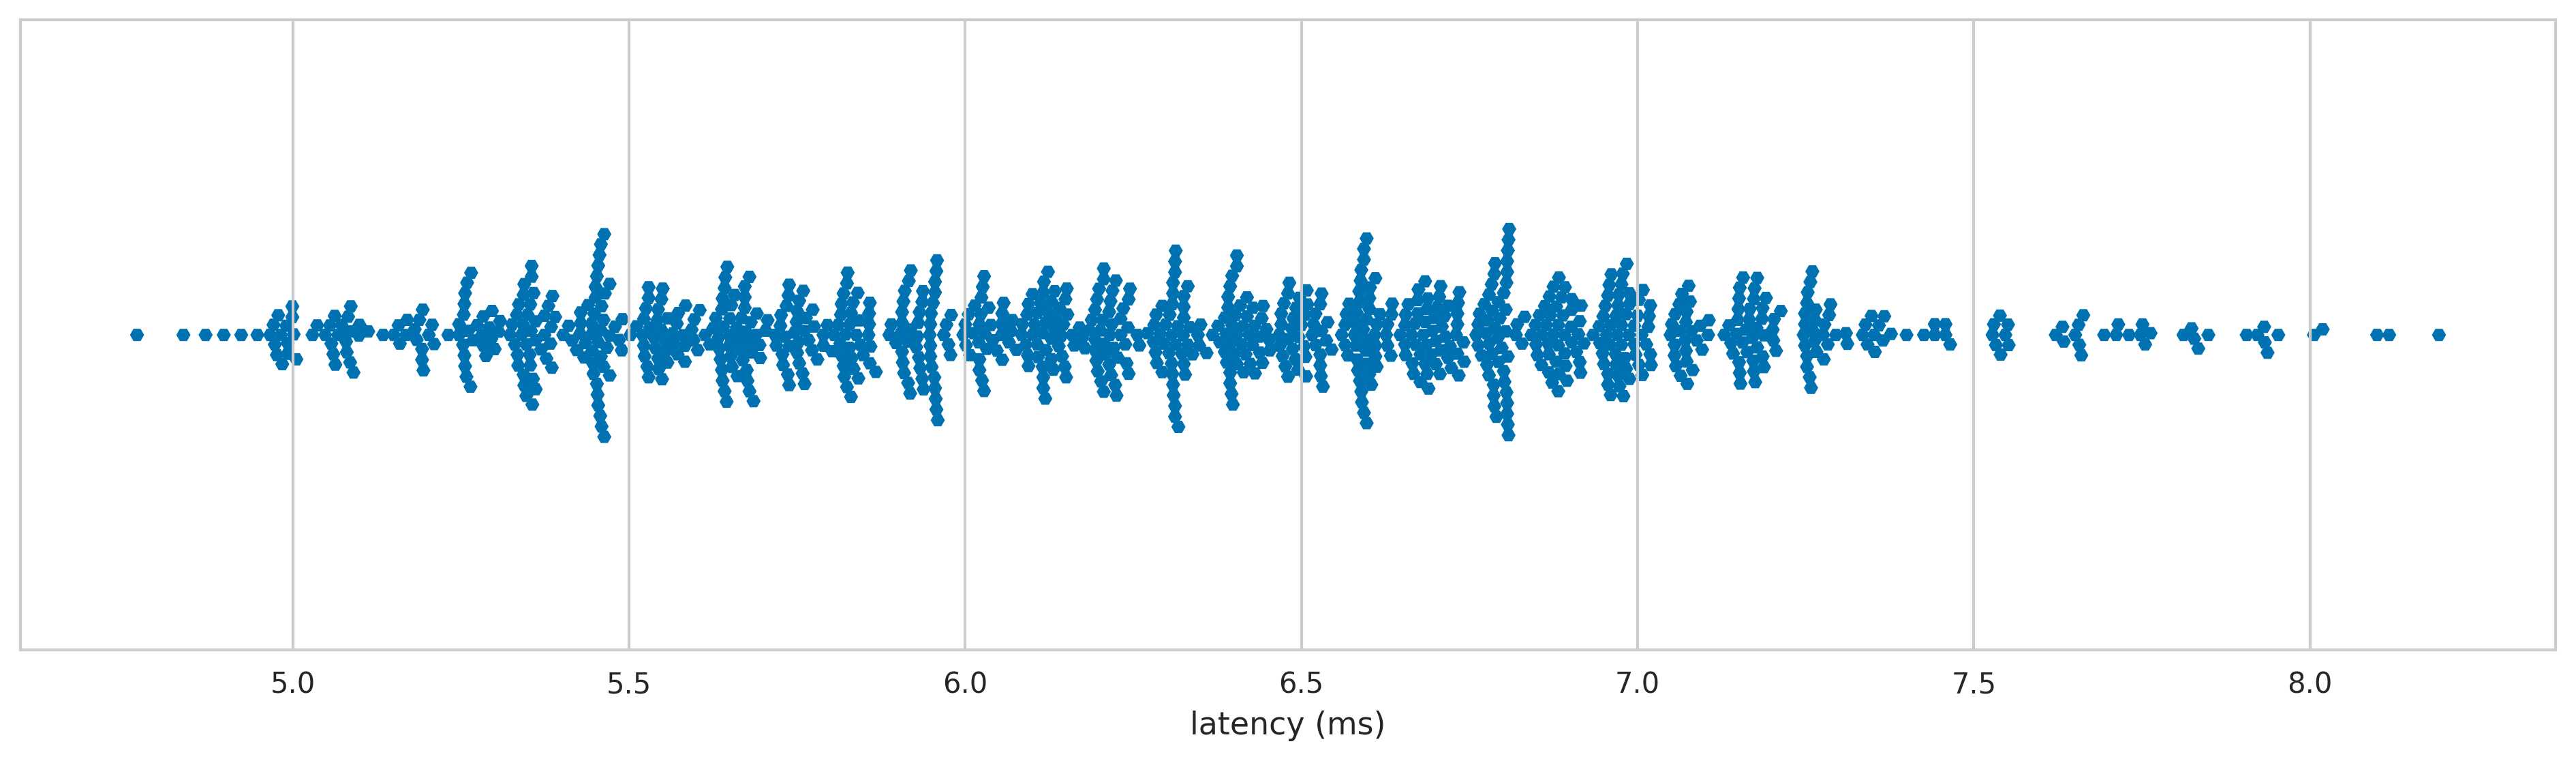 Logitech G700 latency distribution 